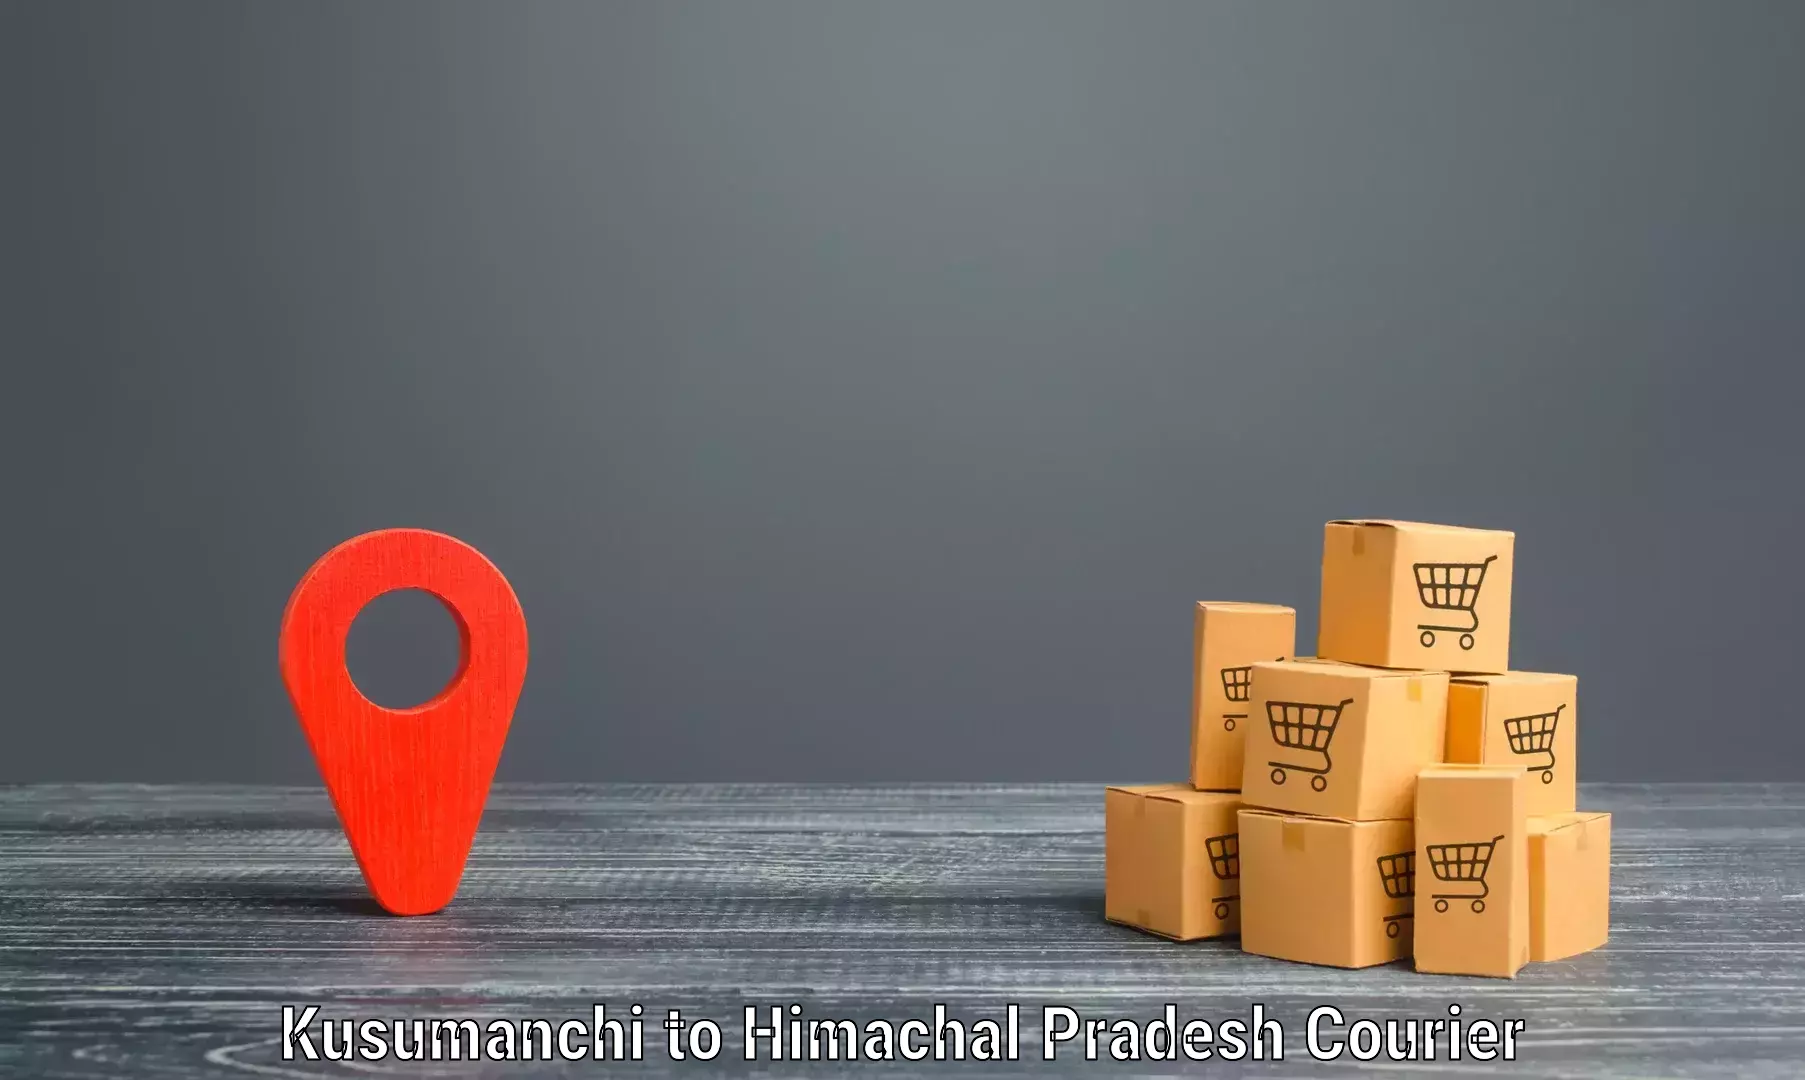 E-commerce shipping partnerships Kusumanchi to Himachal Pradesh